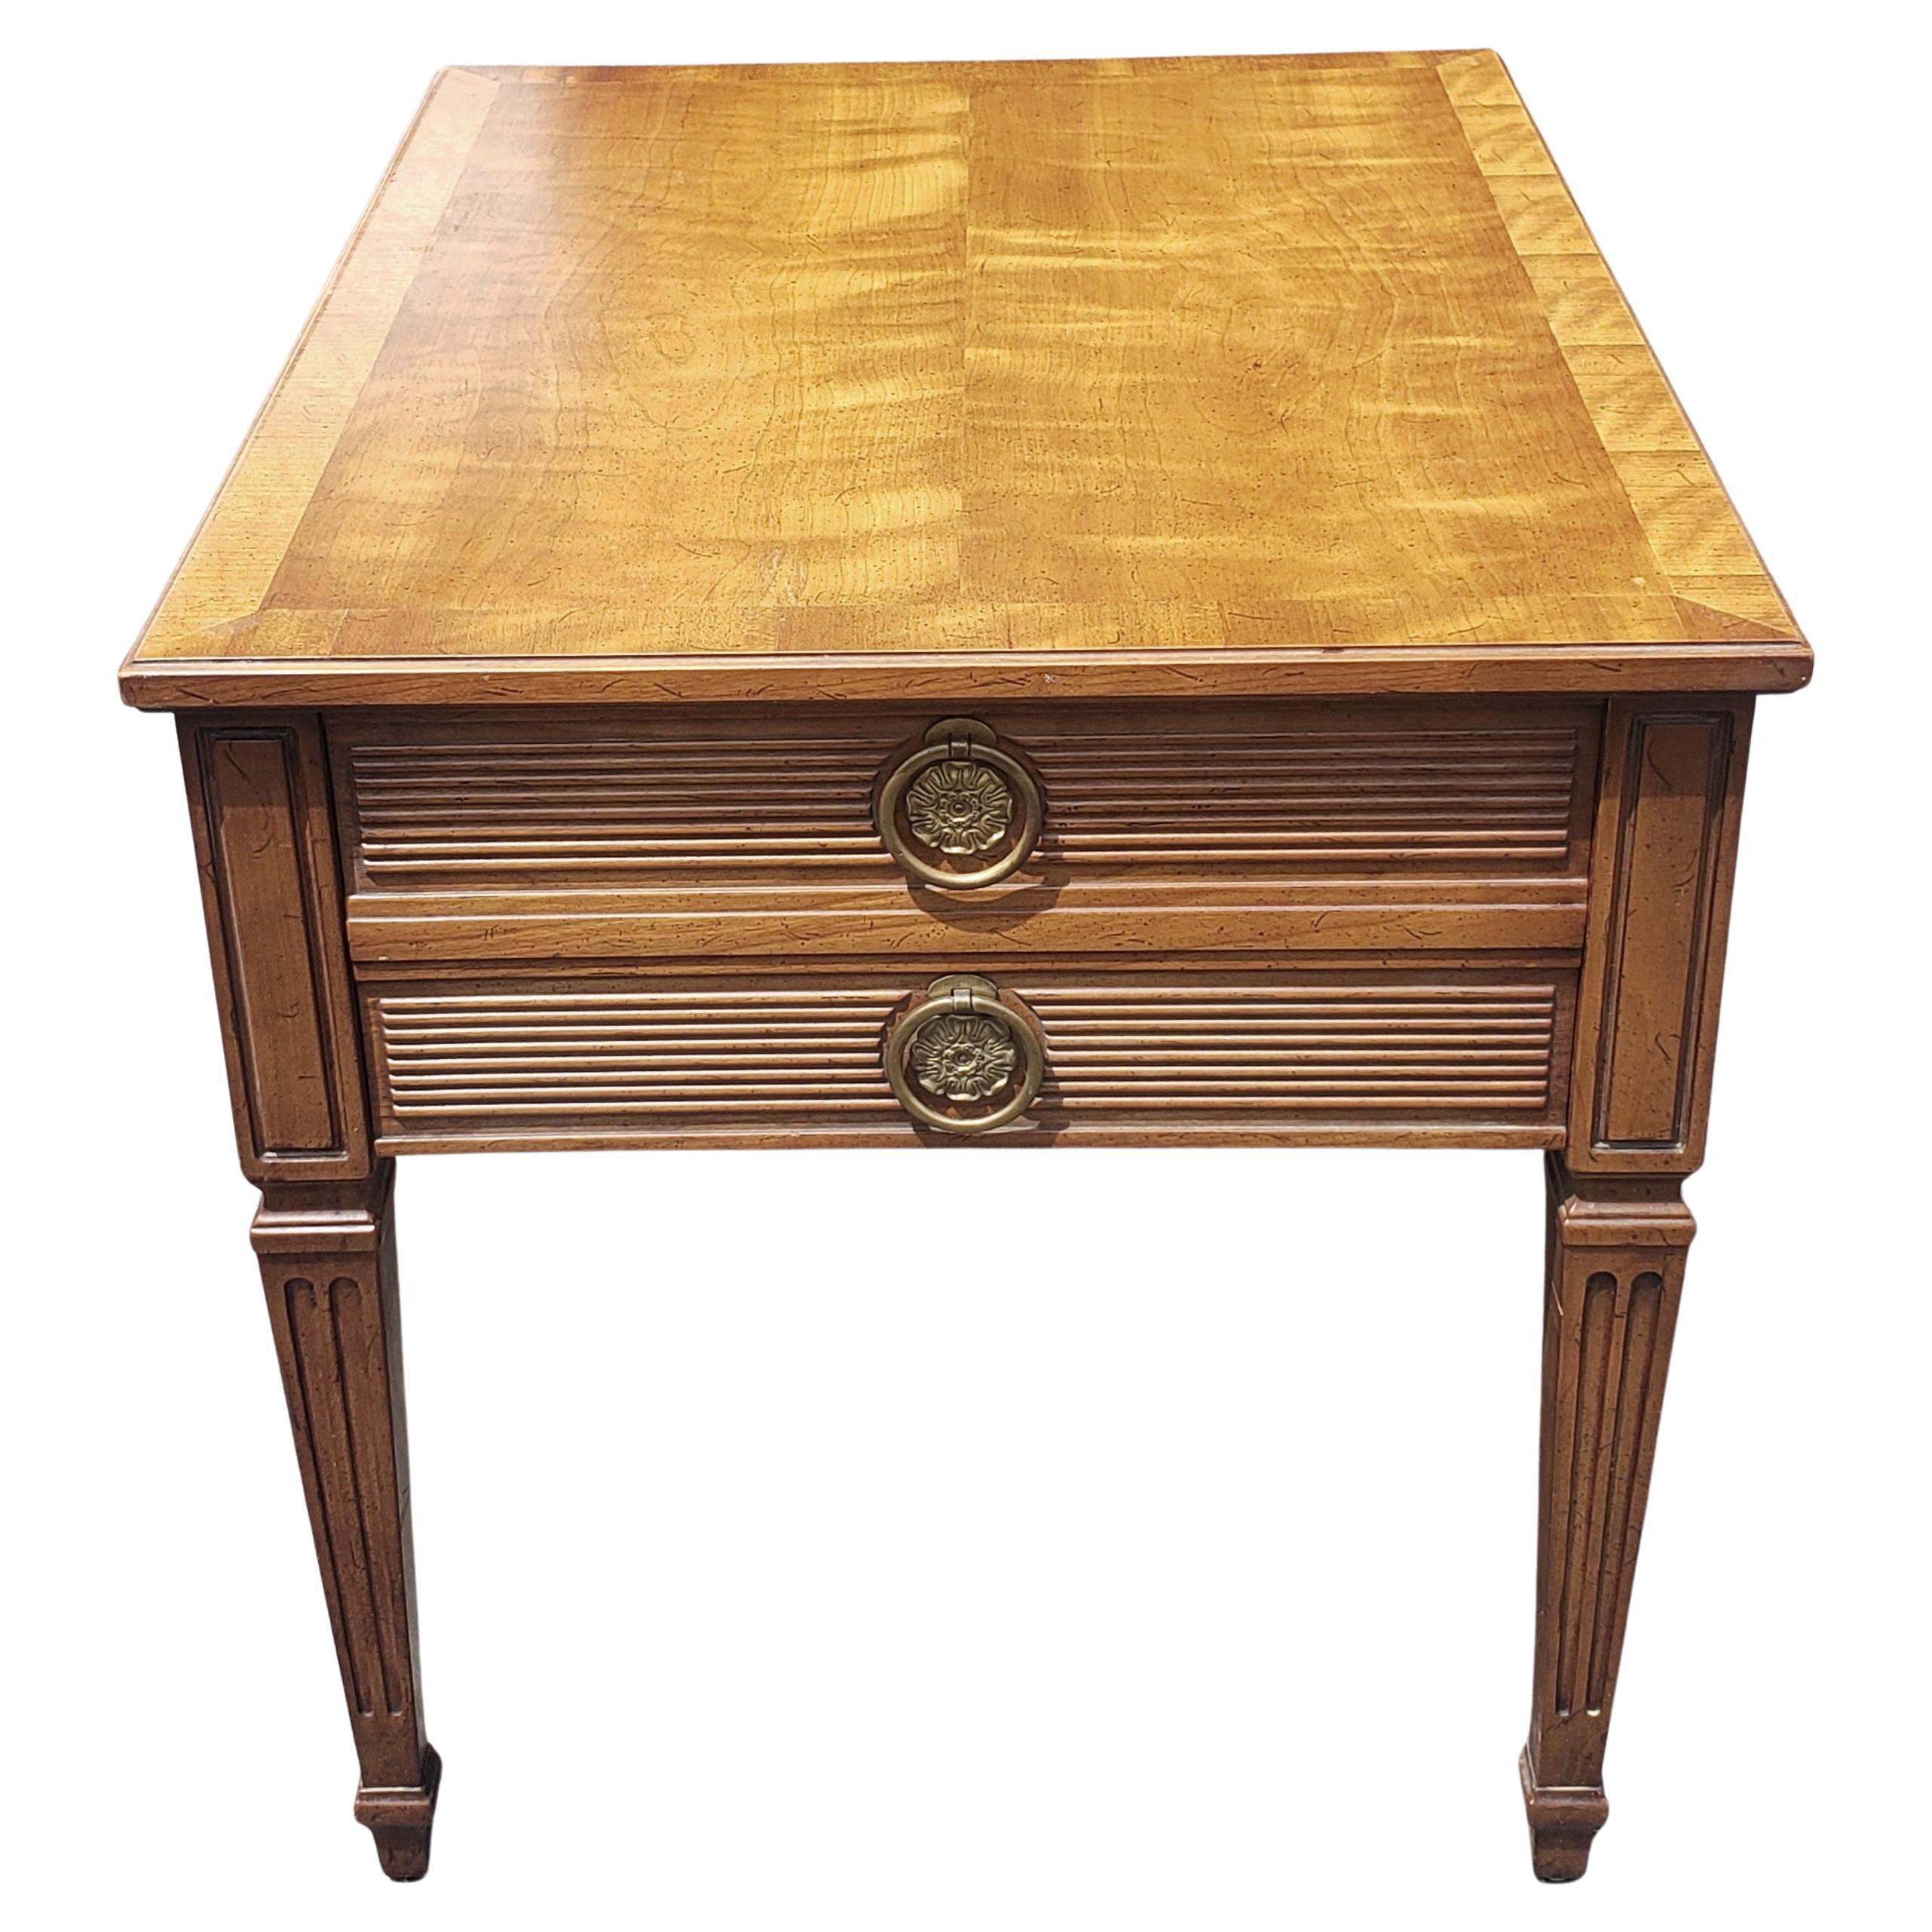 Henredon Mid-Century Cross-banded Walnut Single Drawer Side Table (Table d'appoint à un tiroir)